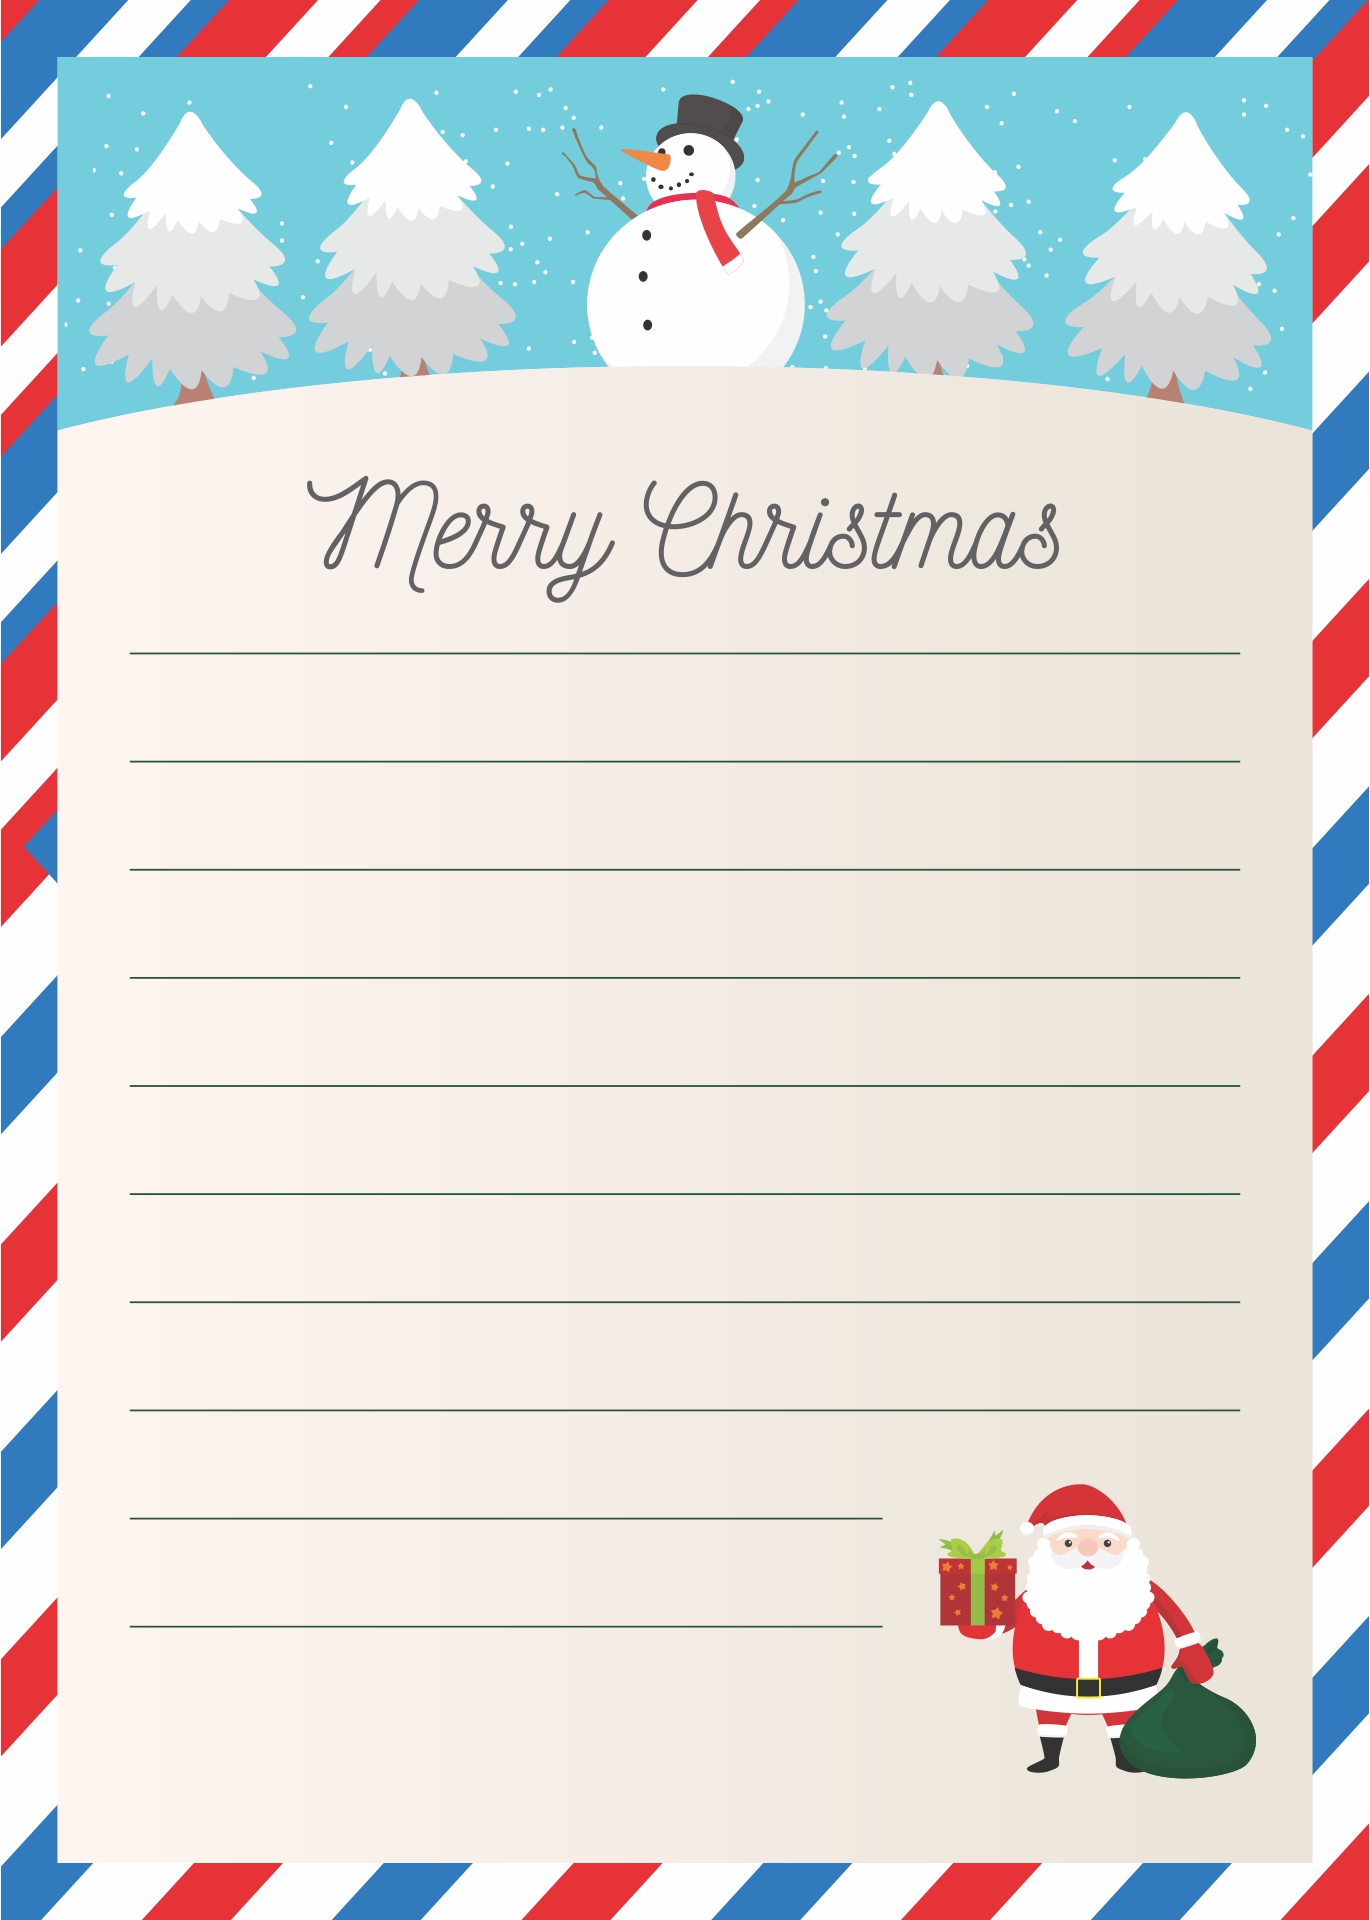 santa-letter-template-free-printable